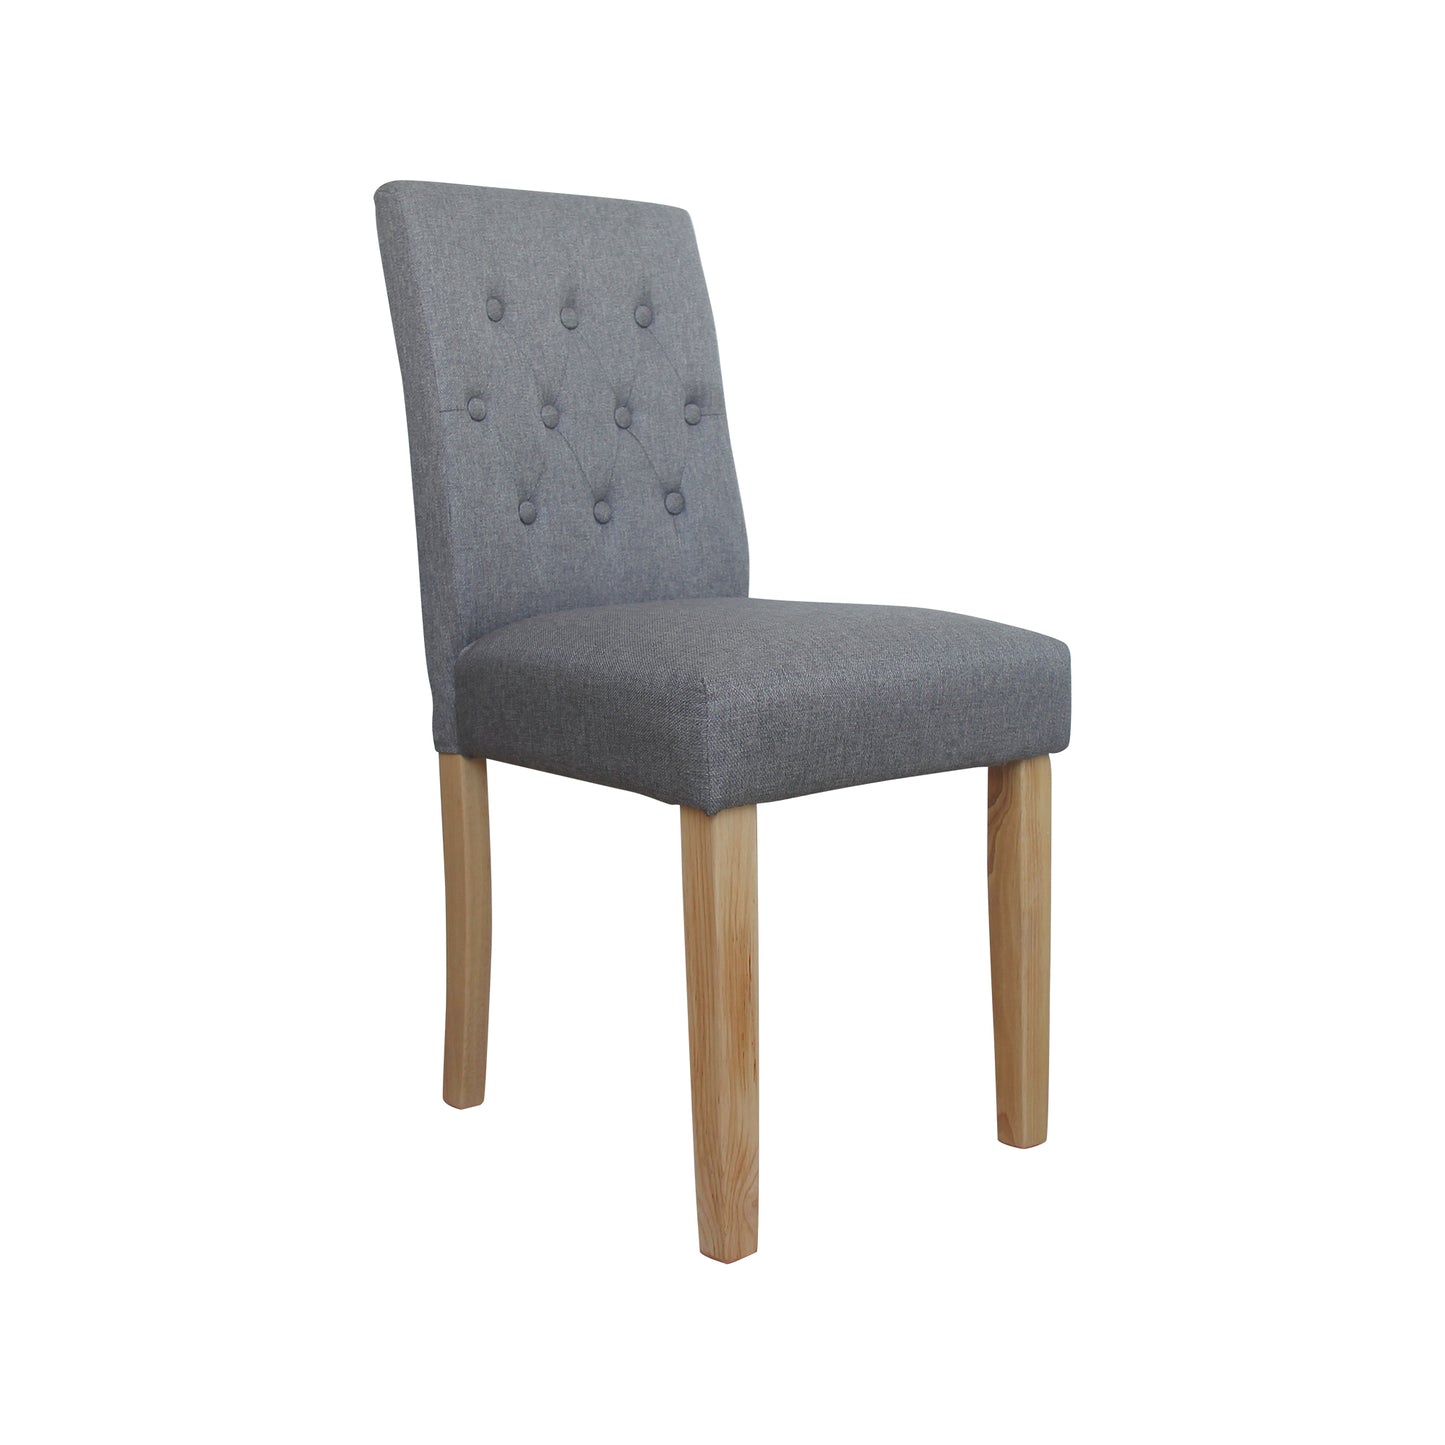 CHOTTO - Sato Fabric High Back Sofa Dining Chairs x 2